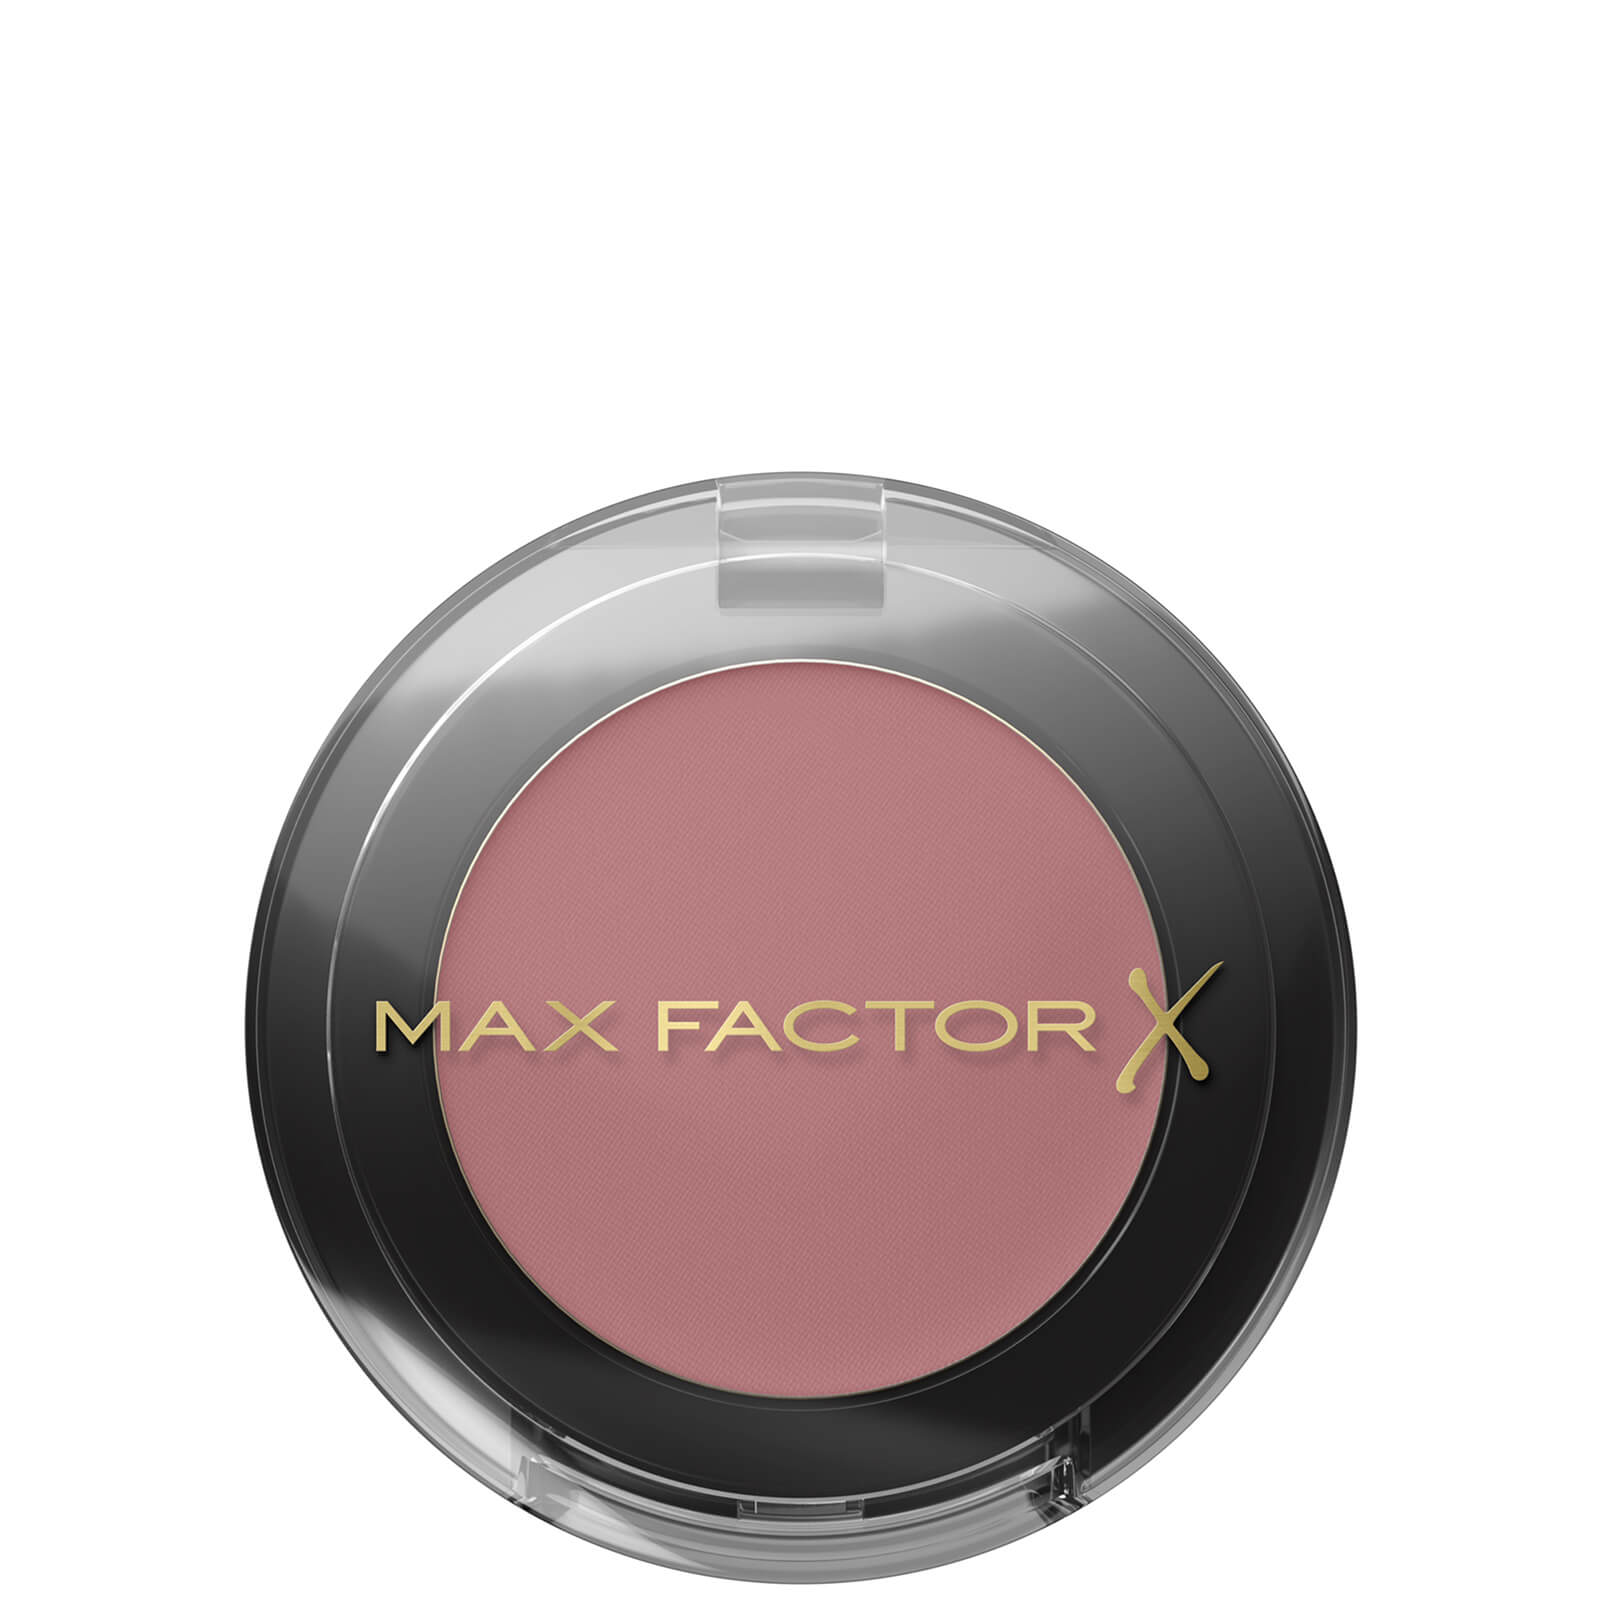 Max Factor Masterpiece Mono Eyeshadow 1.85g (Various Shades) - Dreamy Aurora 02